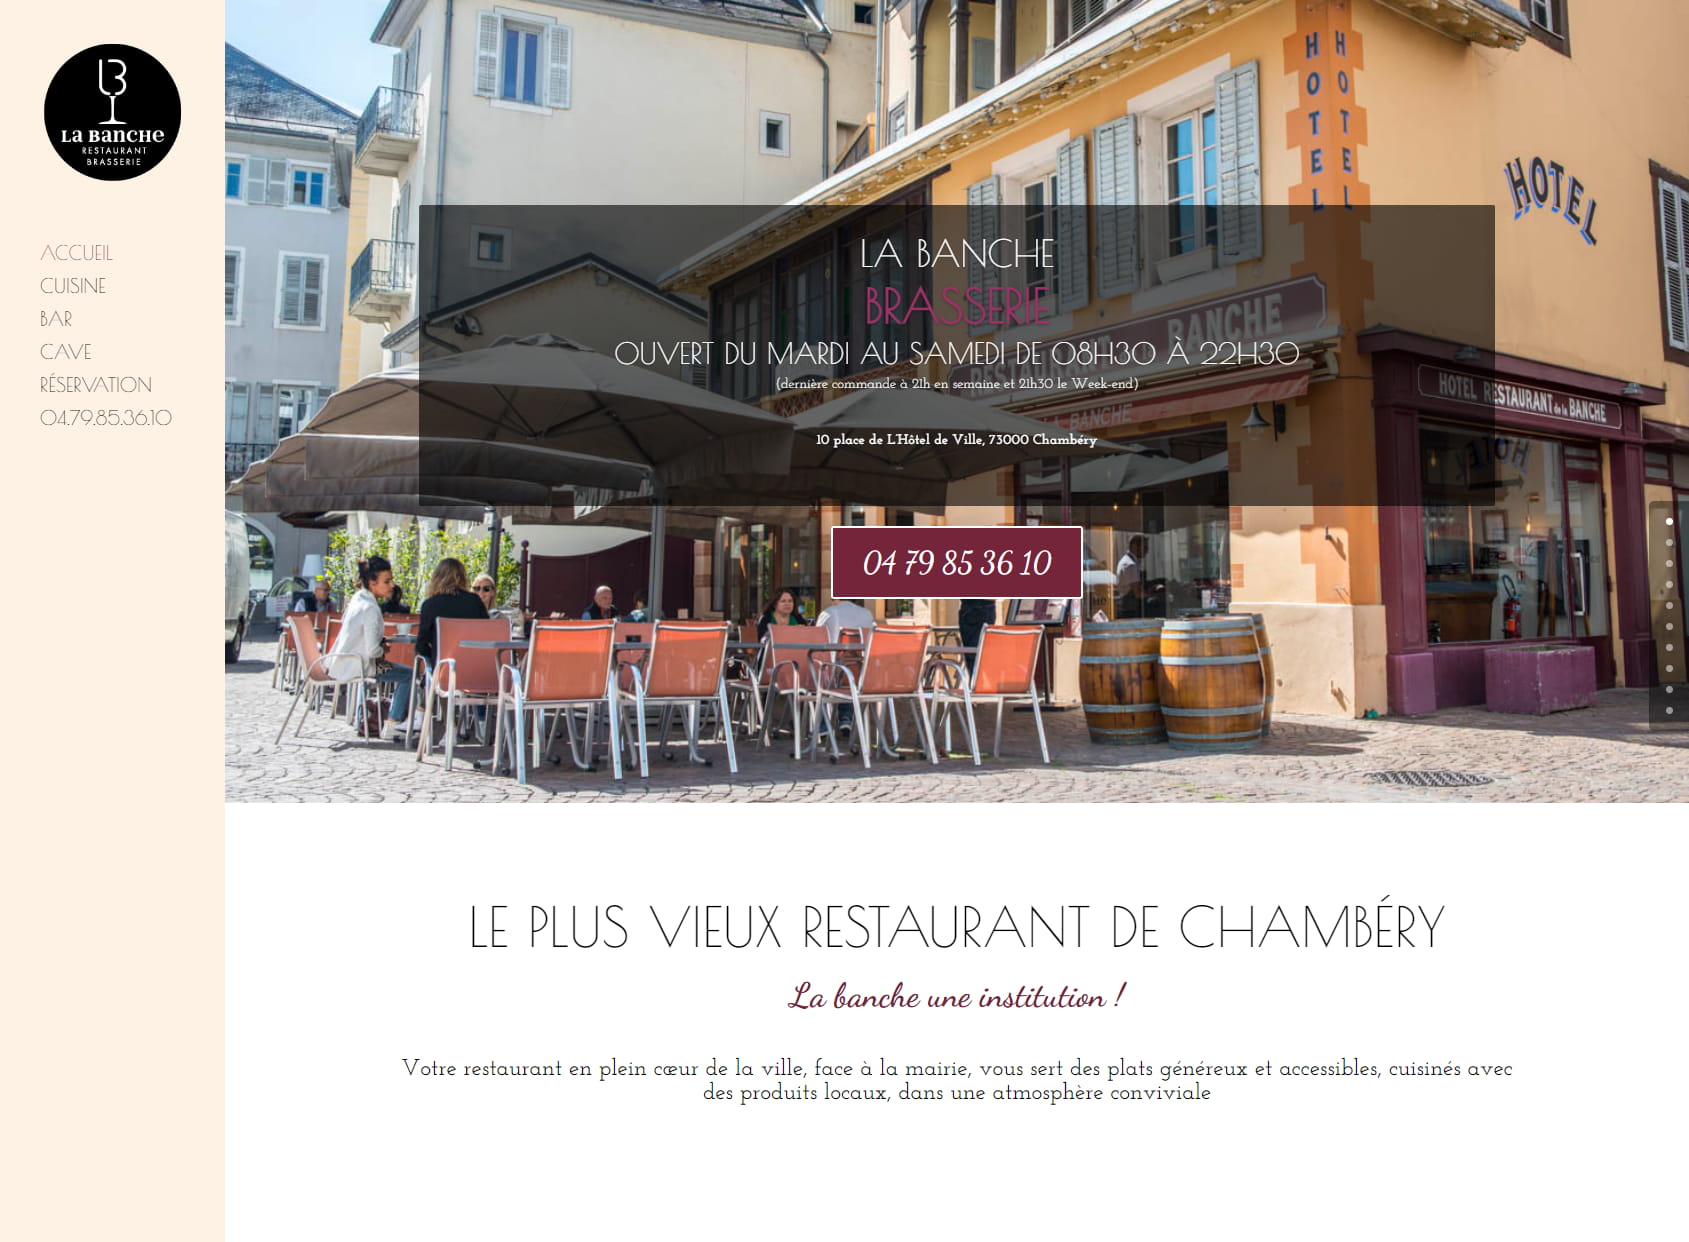 La Banche - Restaurant & Brasserie